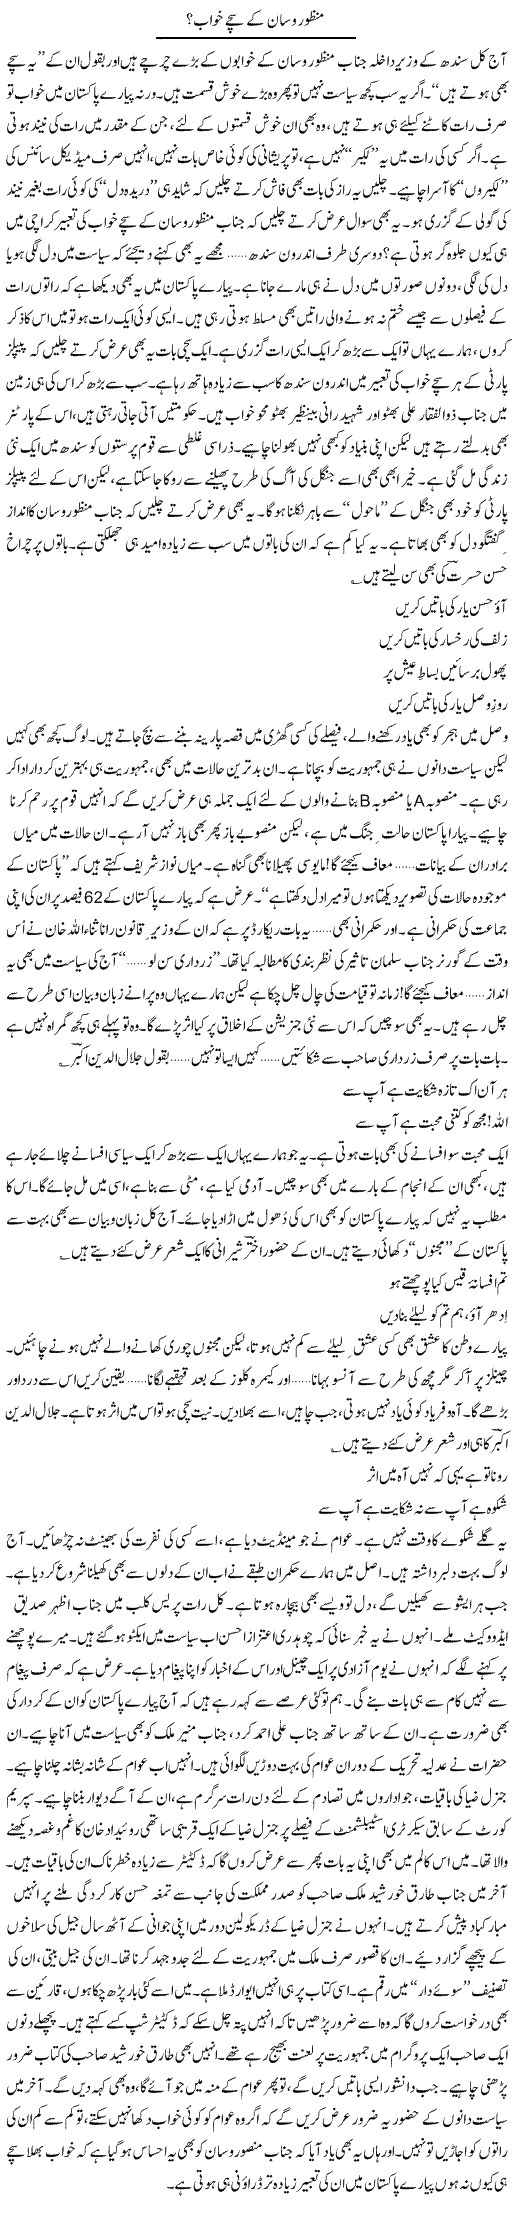 Politics in Pakistan Express Column Ijaz Abdul Hafeez 21 August 2011